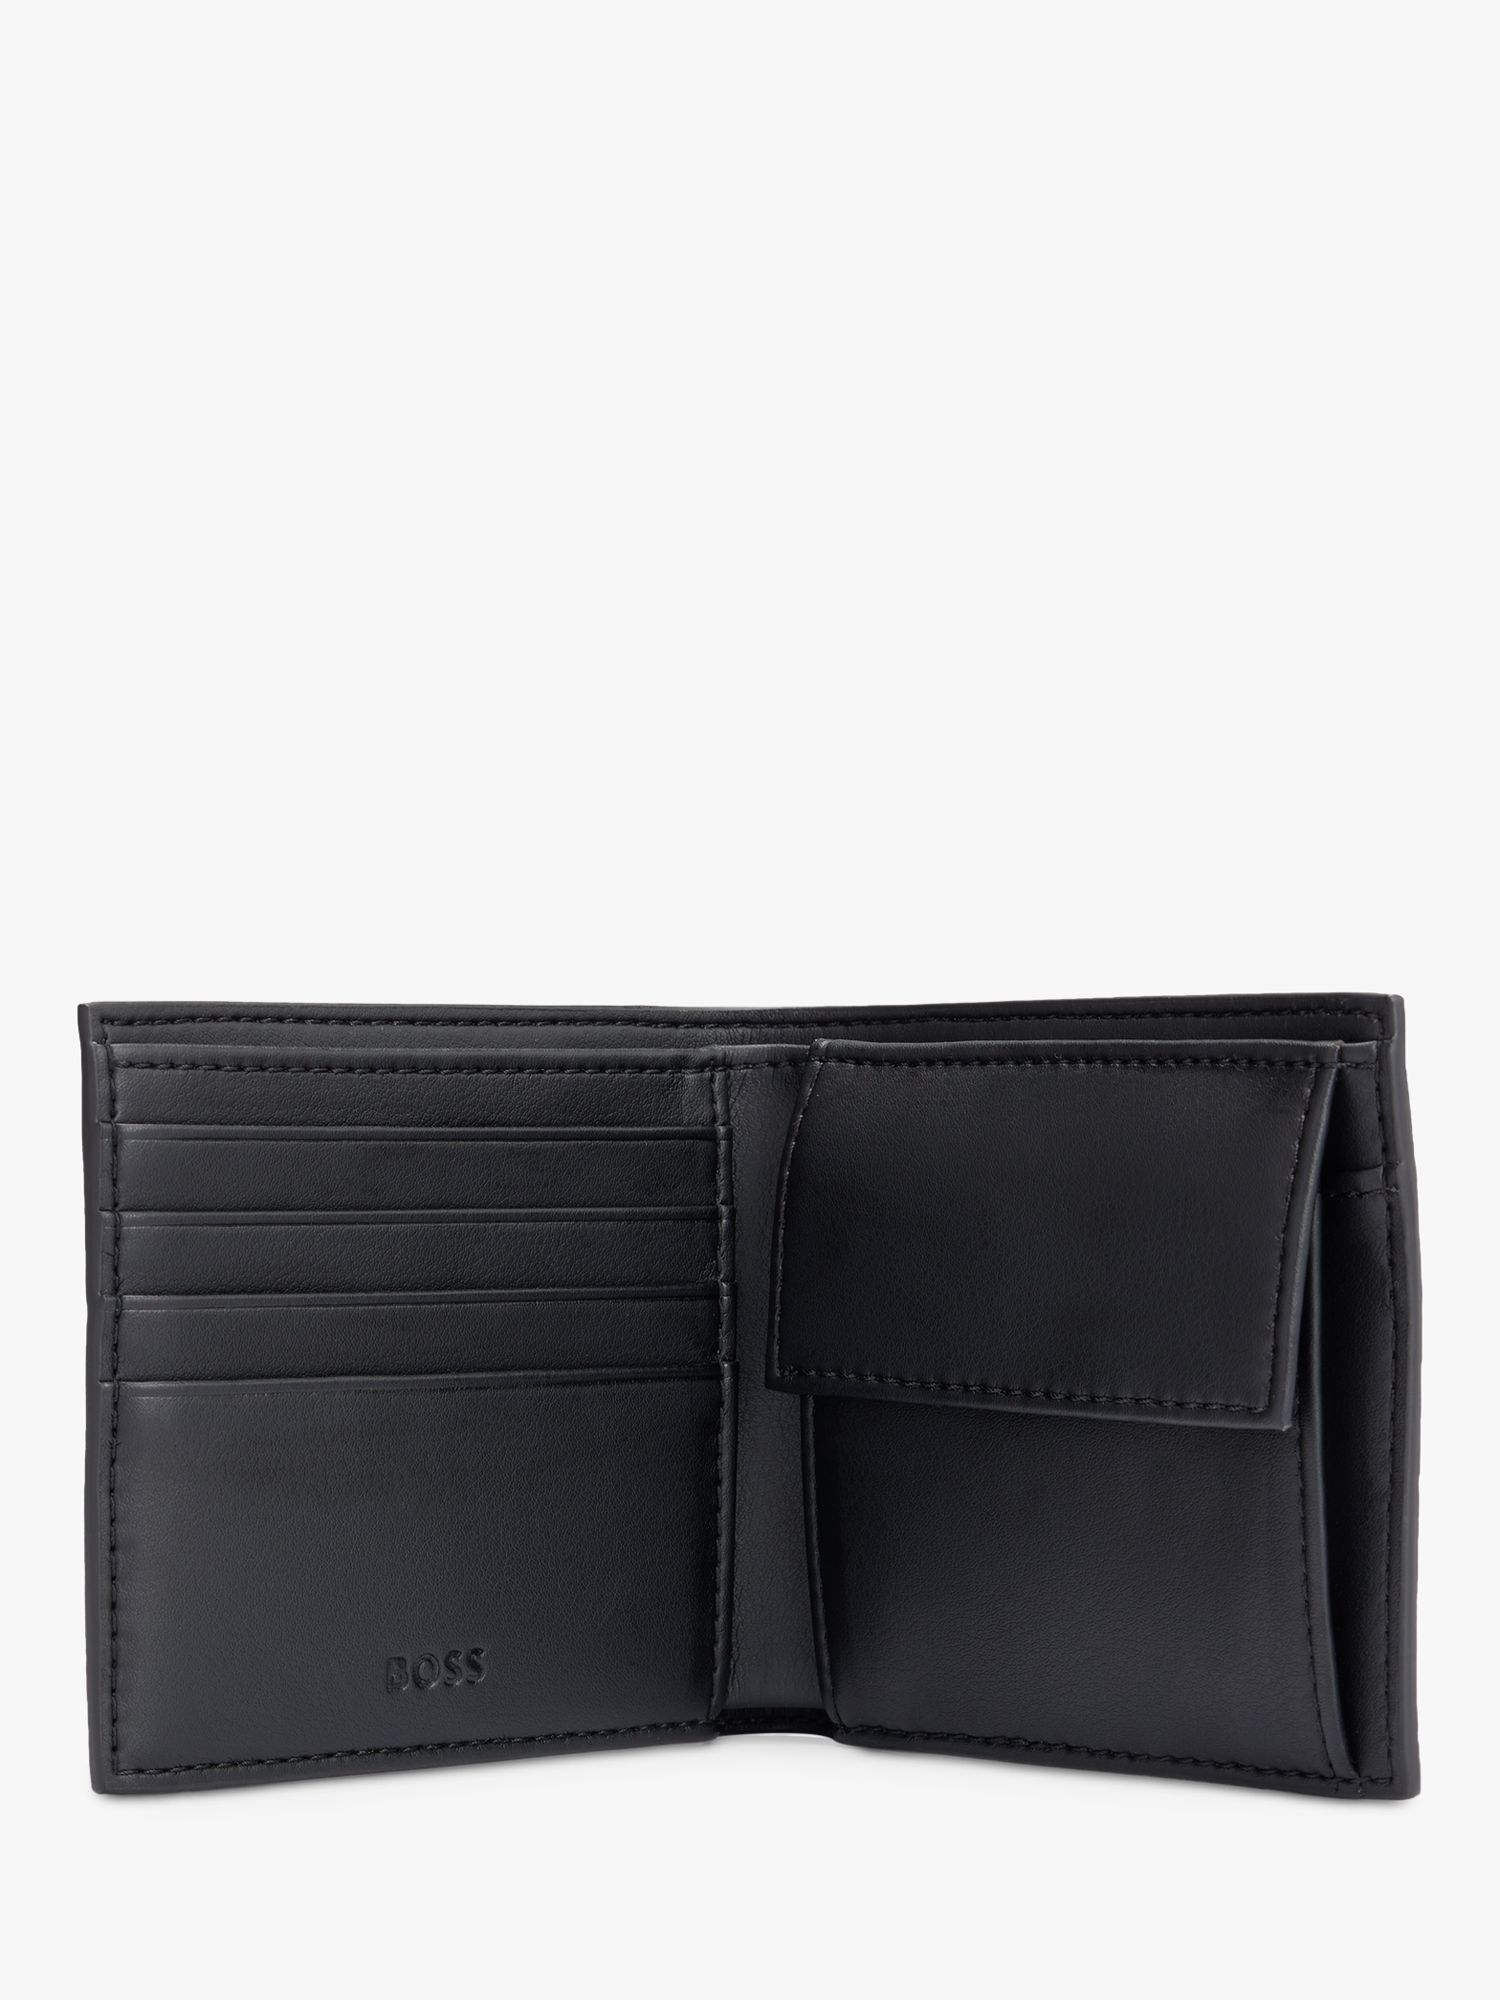 BOSS Faux Leather Signature Stripe Wallet, Black/Multi, One Size